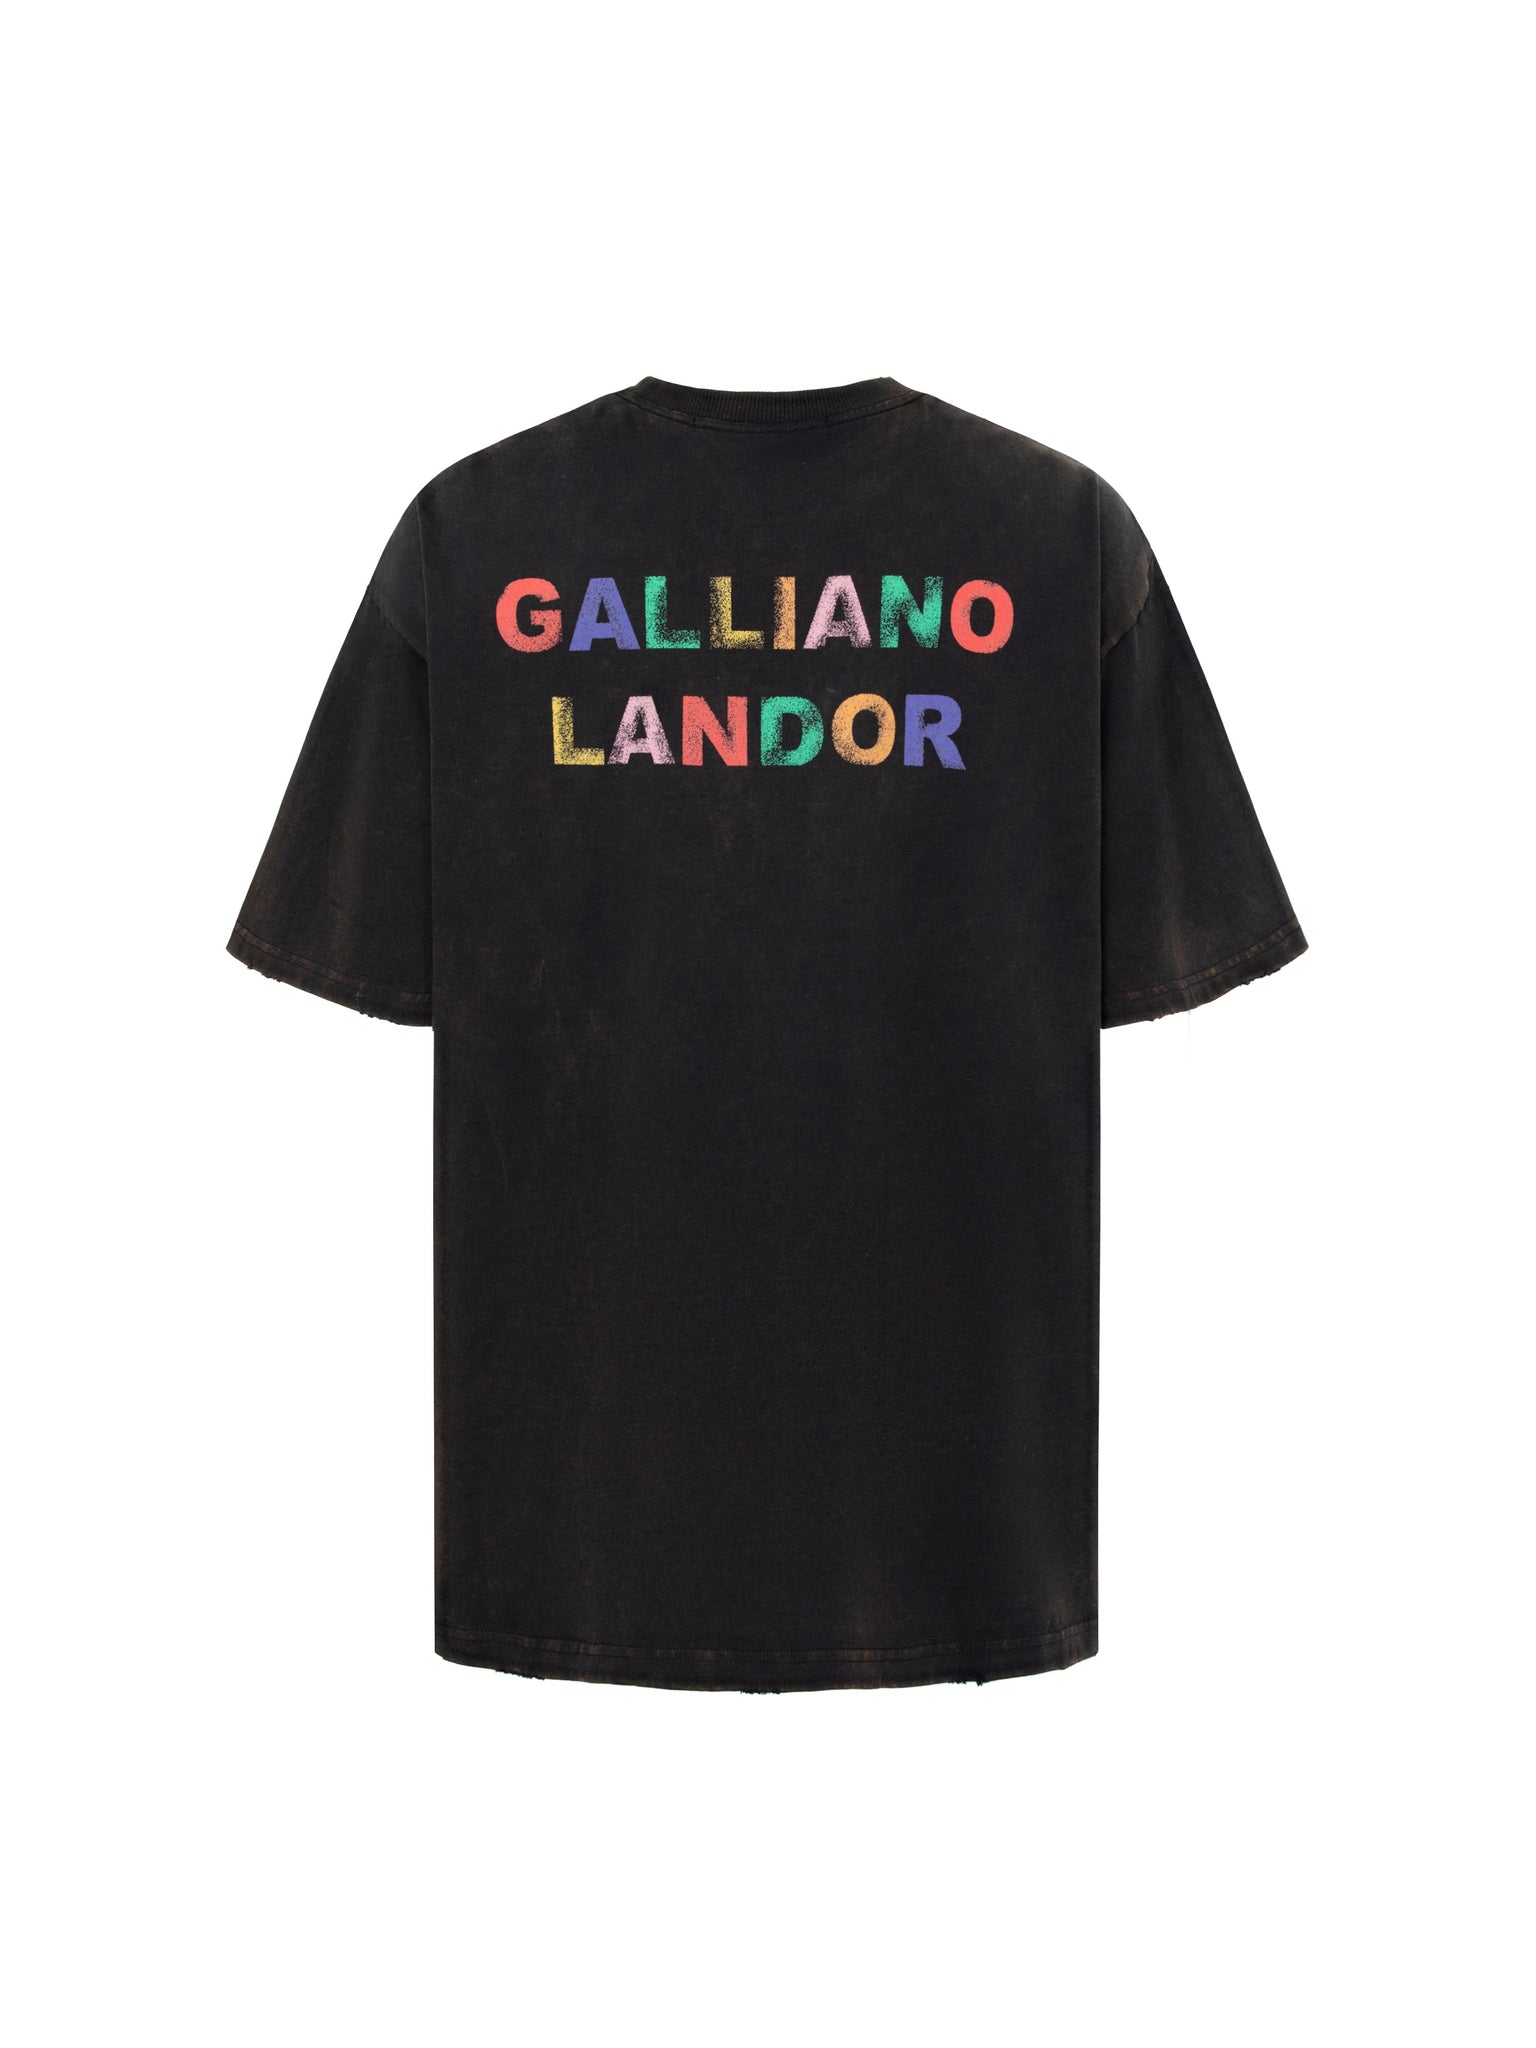 Black antique brass patina logo T-shirt – GALLIANO LANDOR